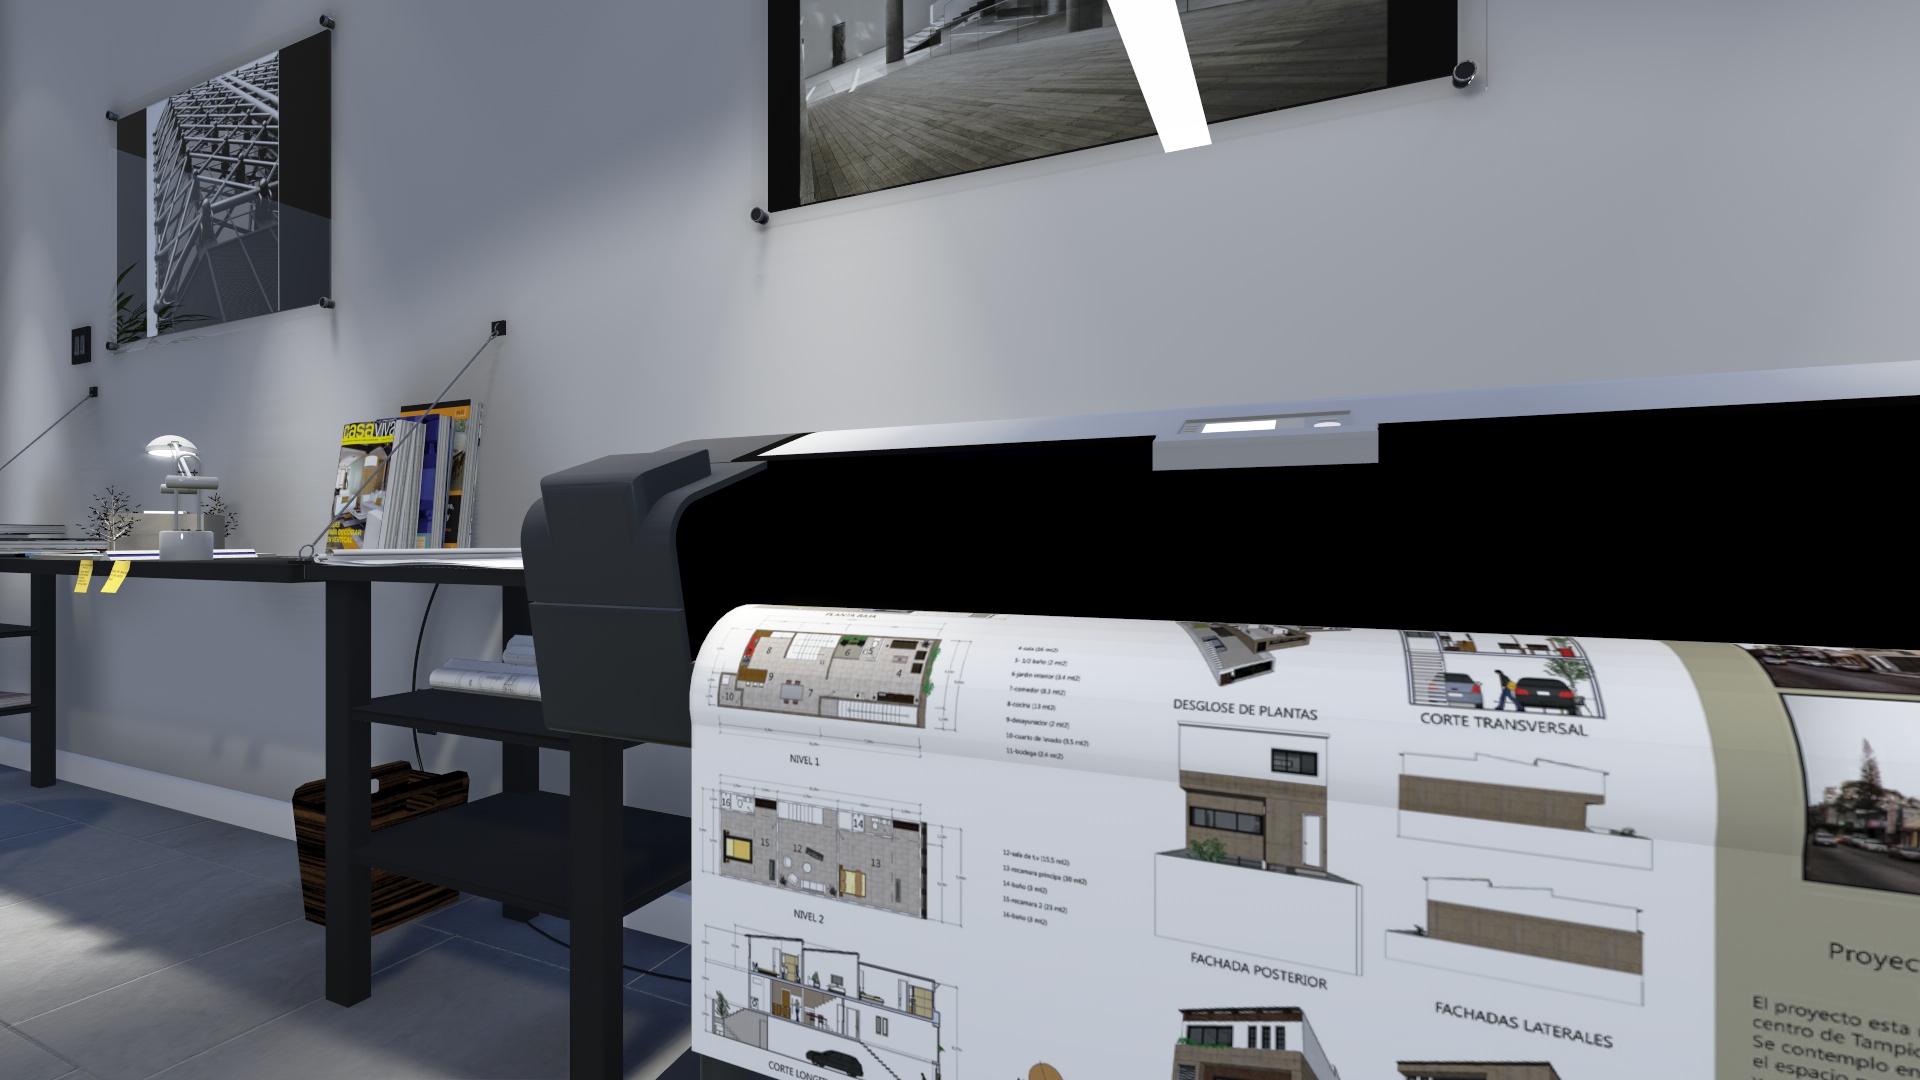 Architectural Office Interior Design & Animation